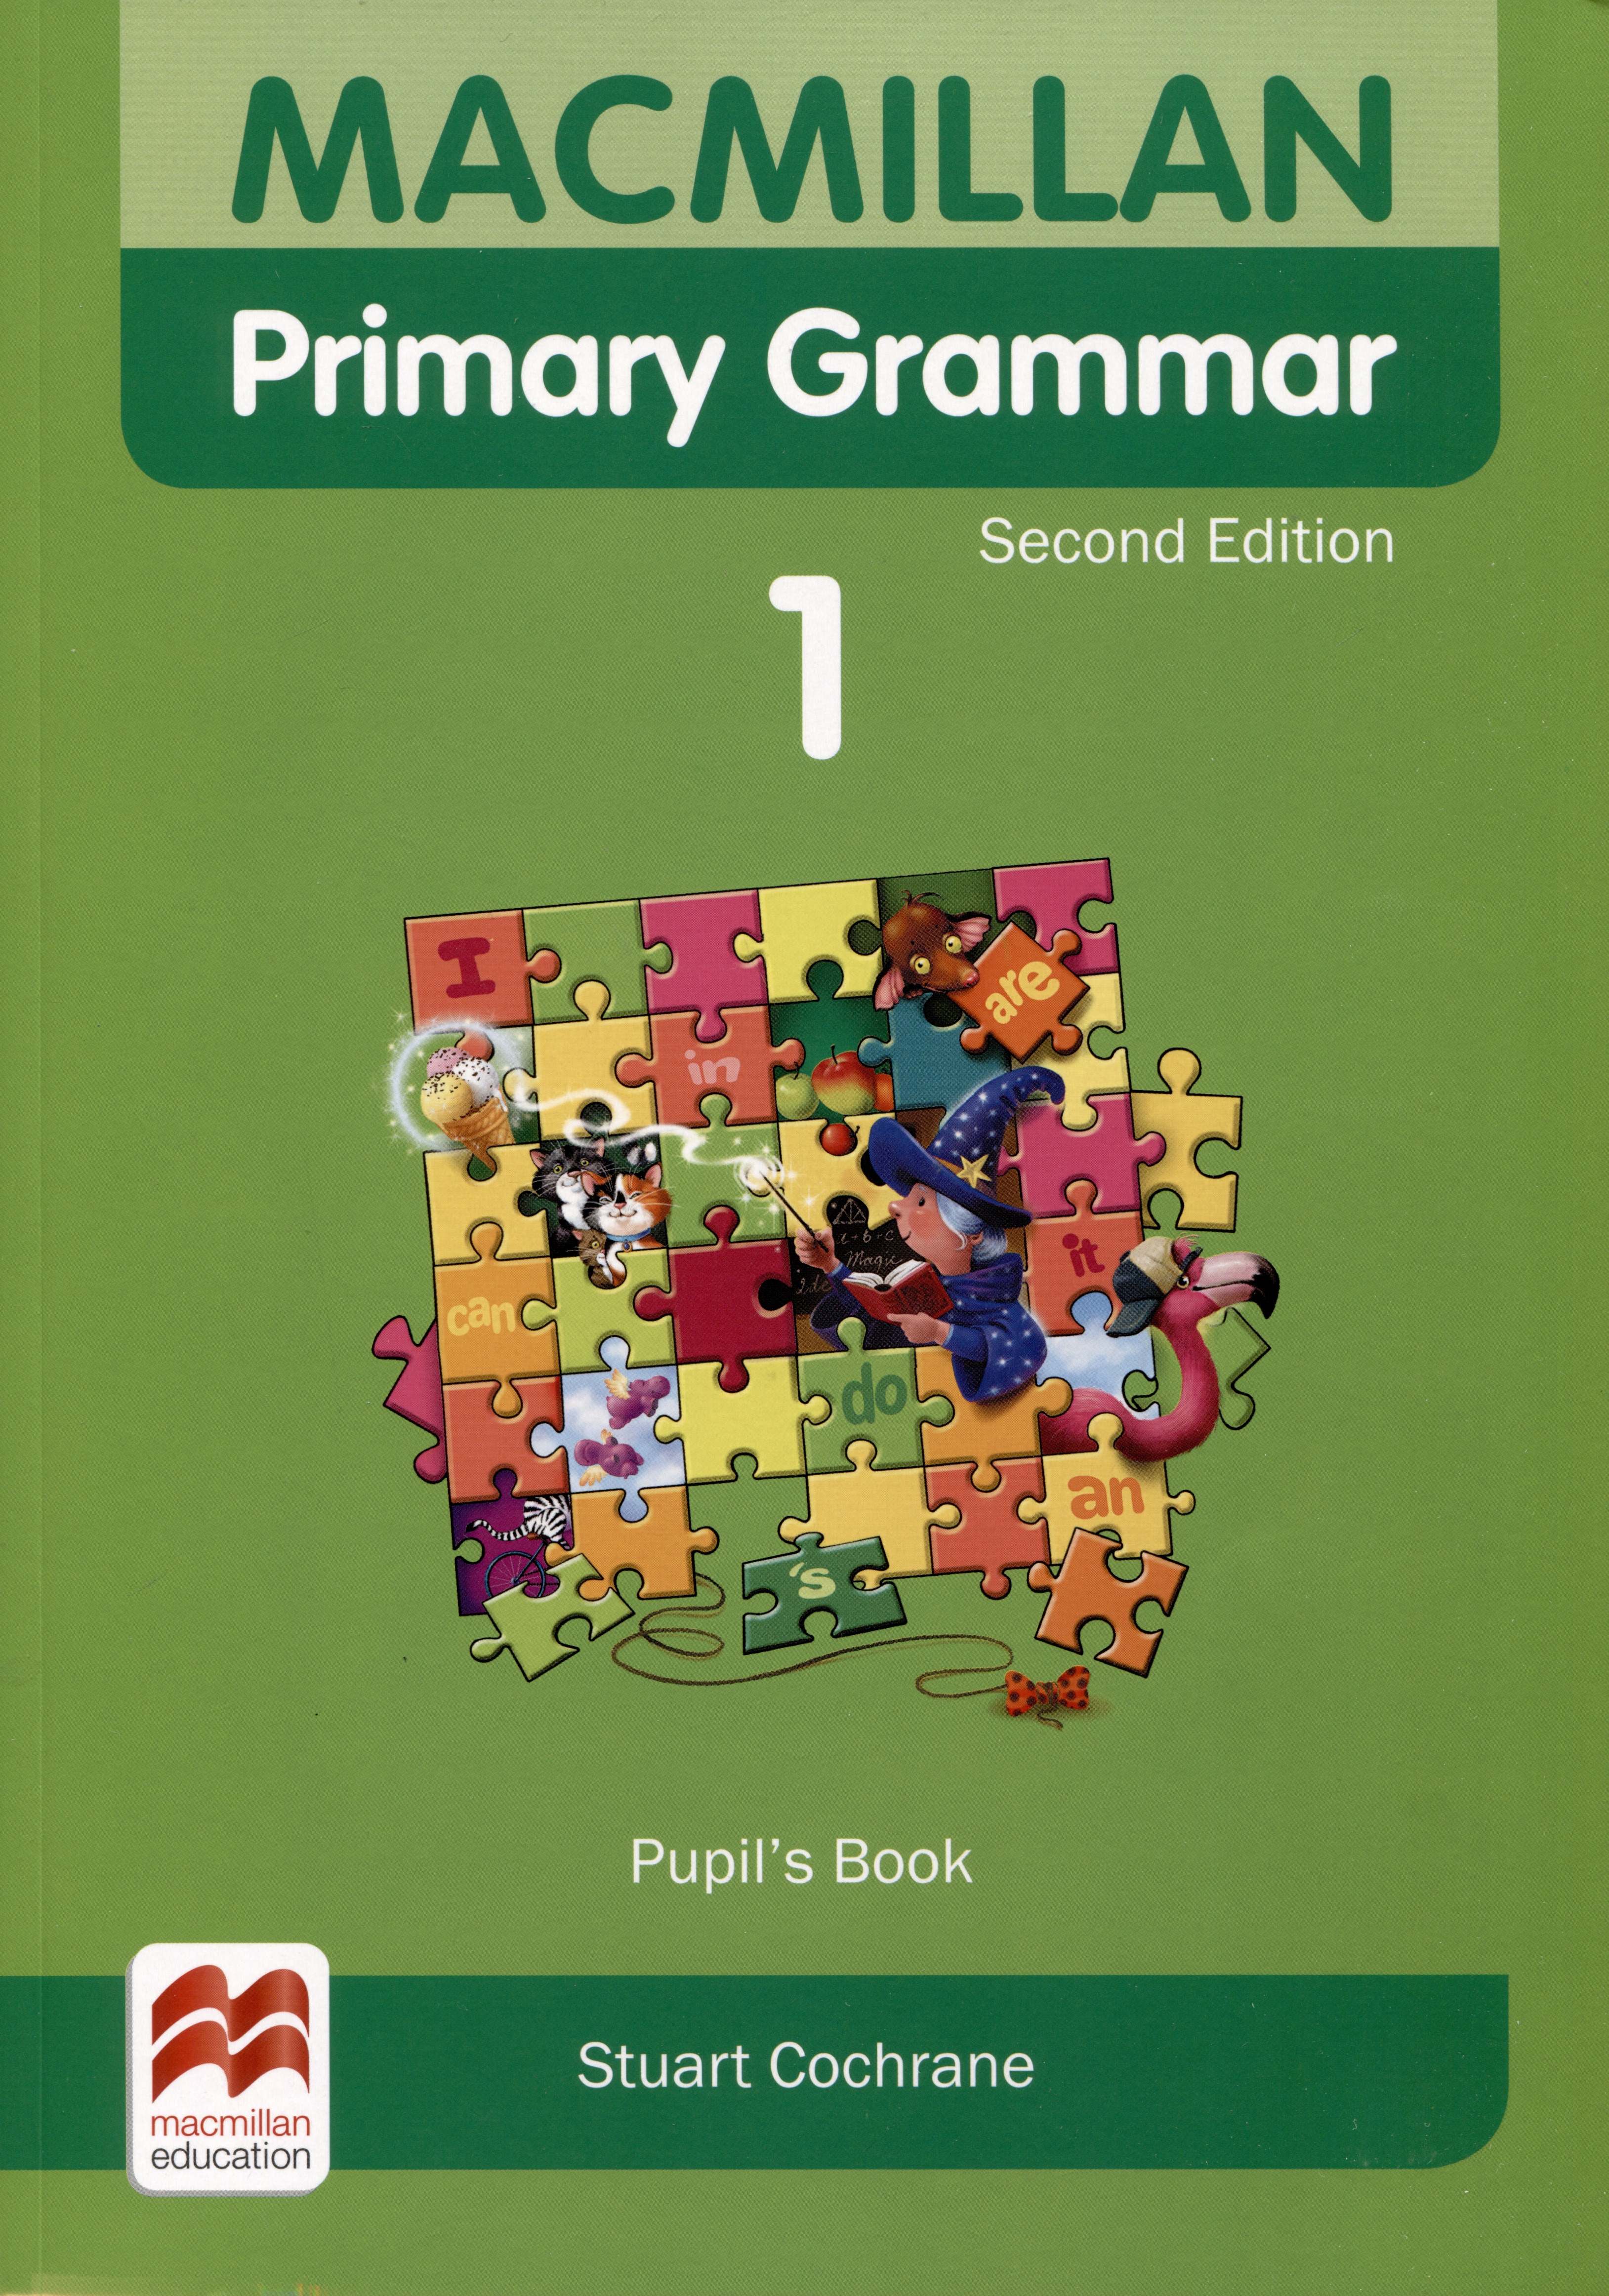 Macmillan s book. Английский Macmillan Primary Grammar. Макмиллан Primary Grammar 2. Macmillan Primary Grammar 1, 2, 3. Macmillan Primary Grammar 1 pupil's book.